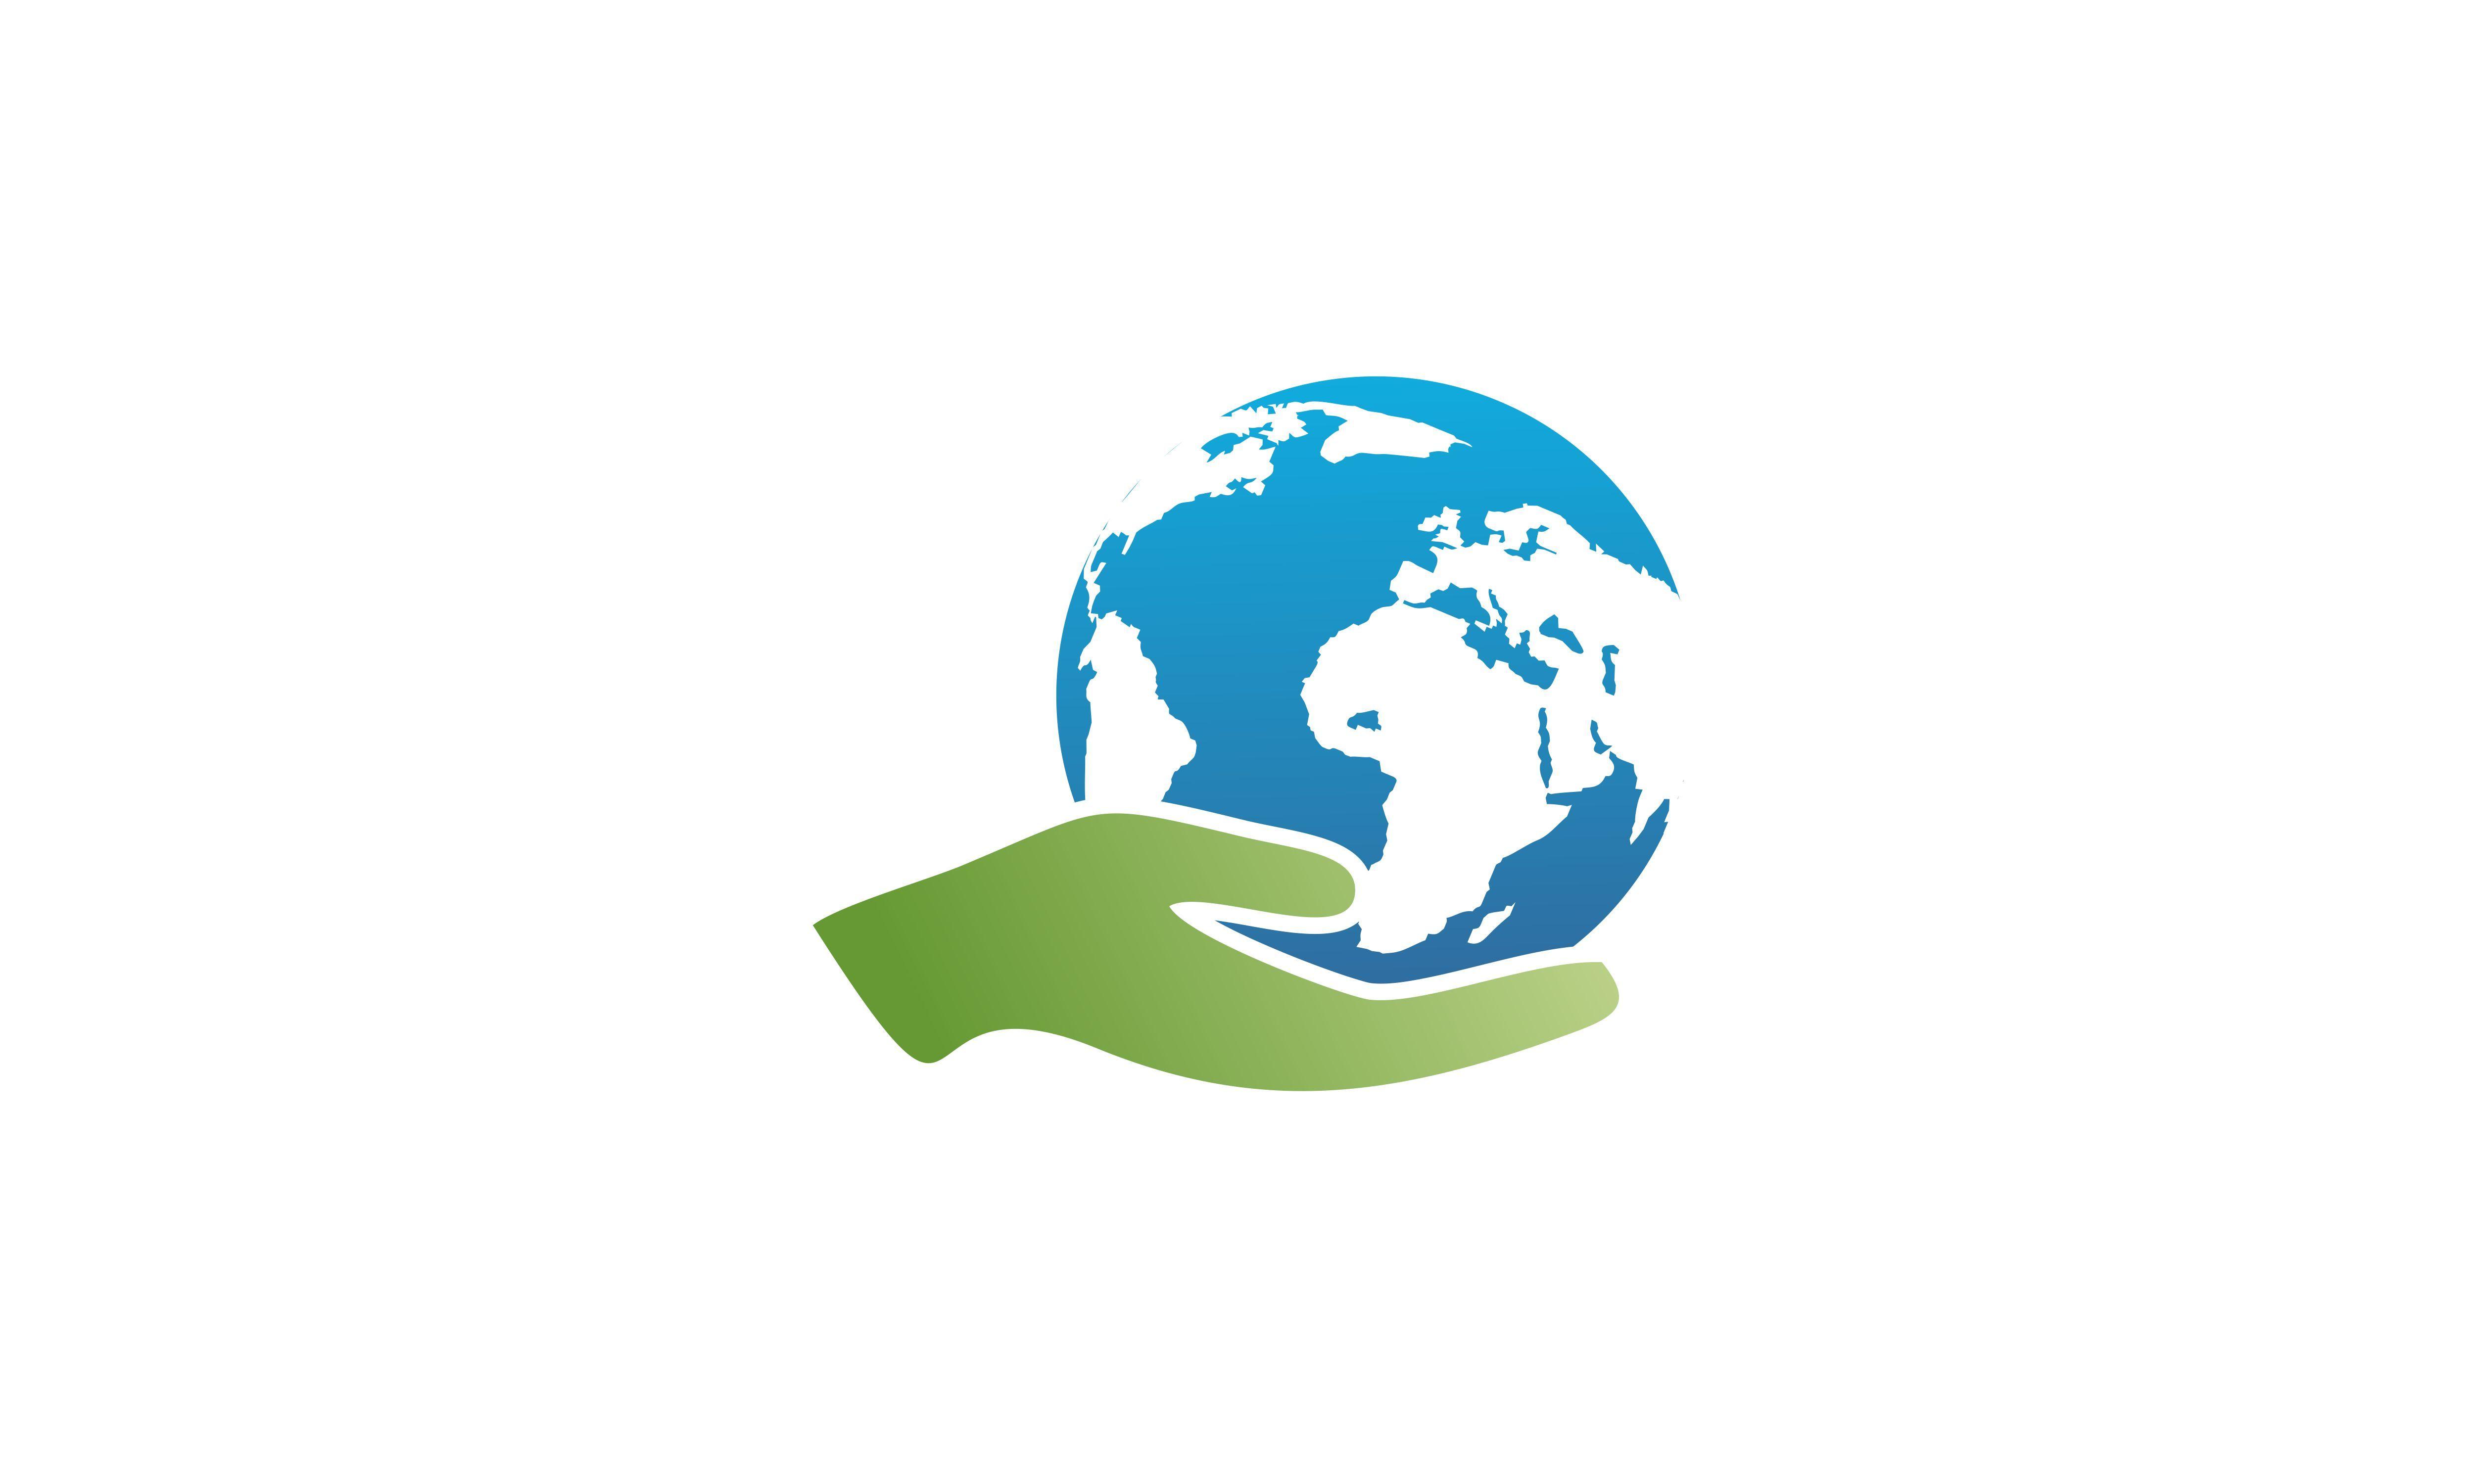 World Globe Logo - Hand Care, World, Globe Logo Graphic by Mansel Brist - Creative Fabrica